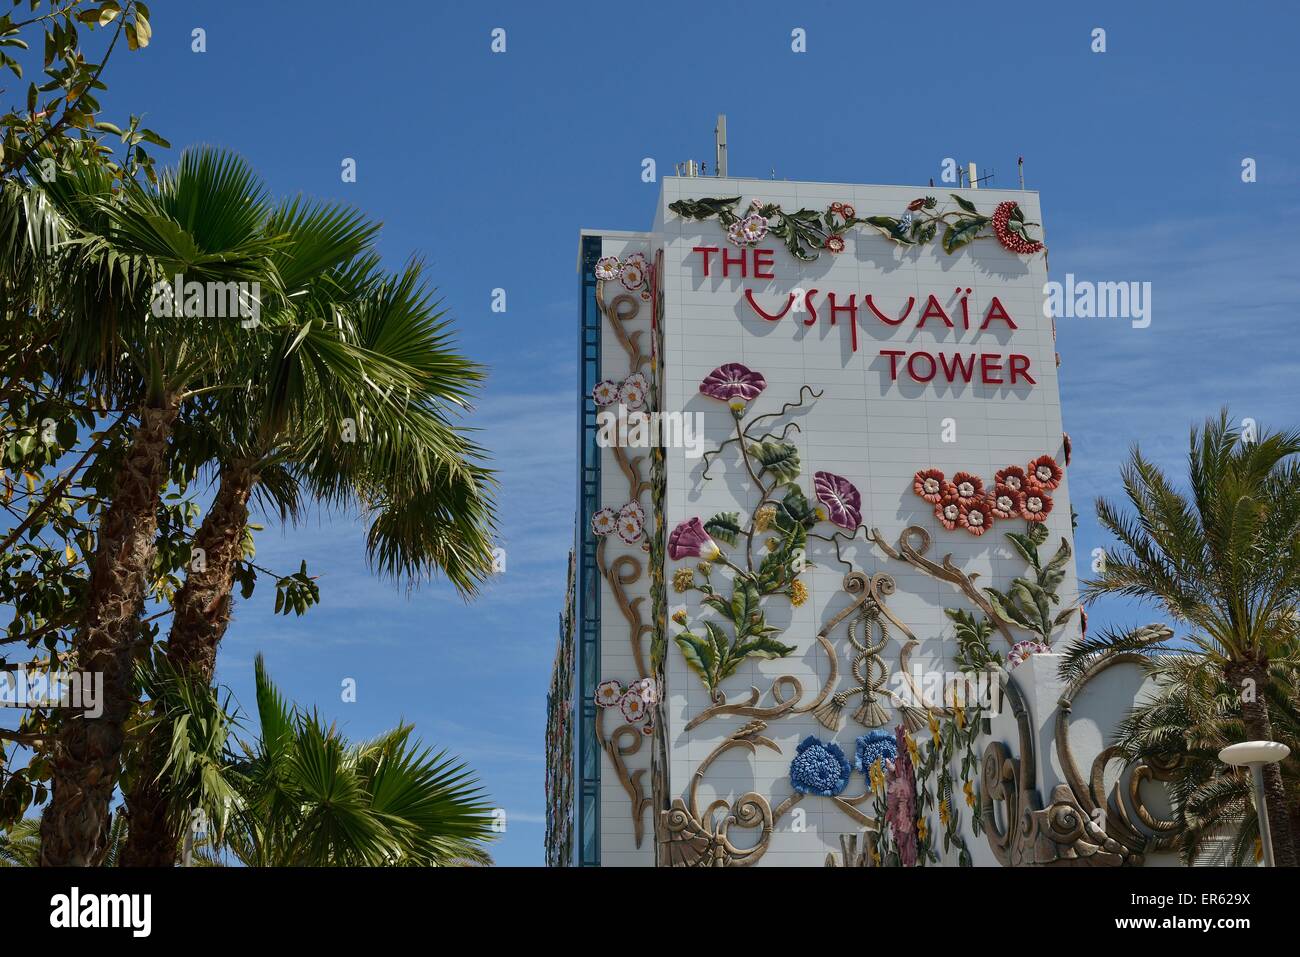 Ushuaia Tower of the Ushuaia Beach Club, Playa d'en Bossa, Ibiza, Balearic Islands, Spain Stock Photo